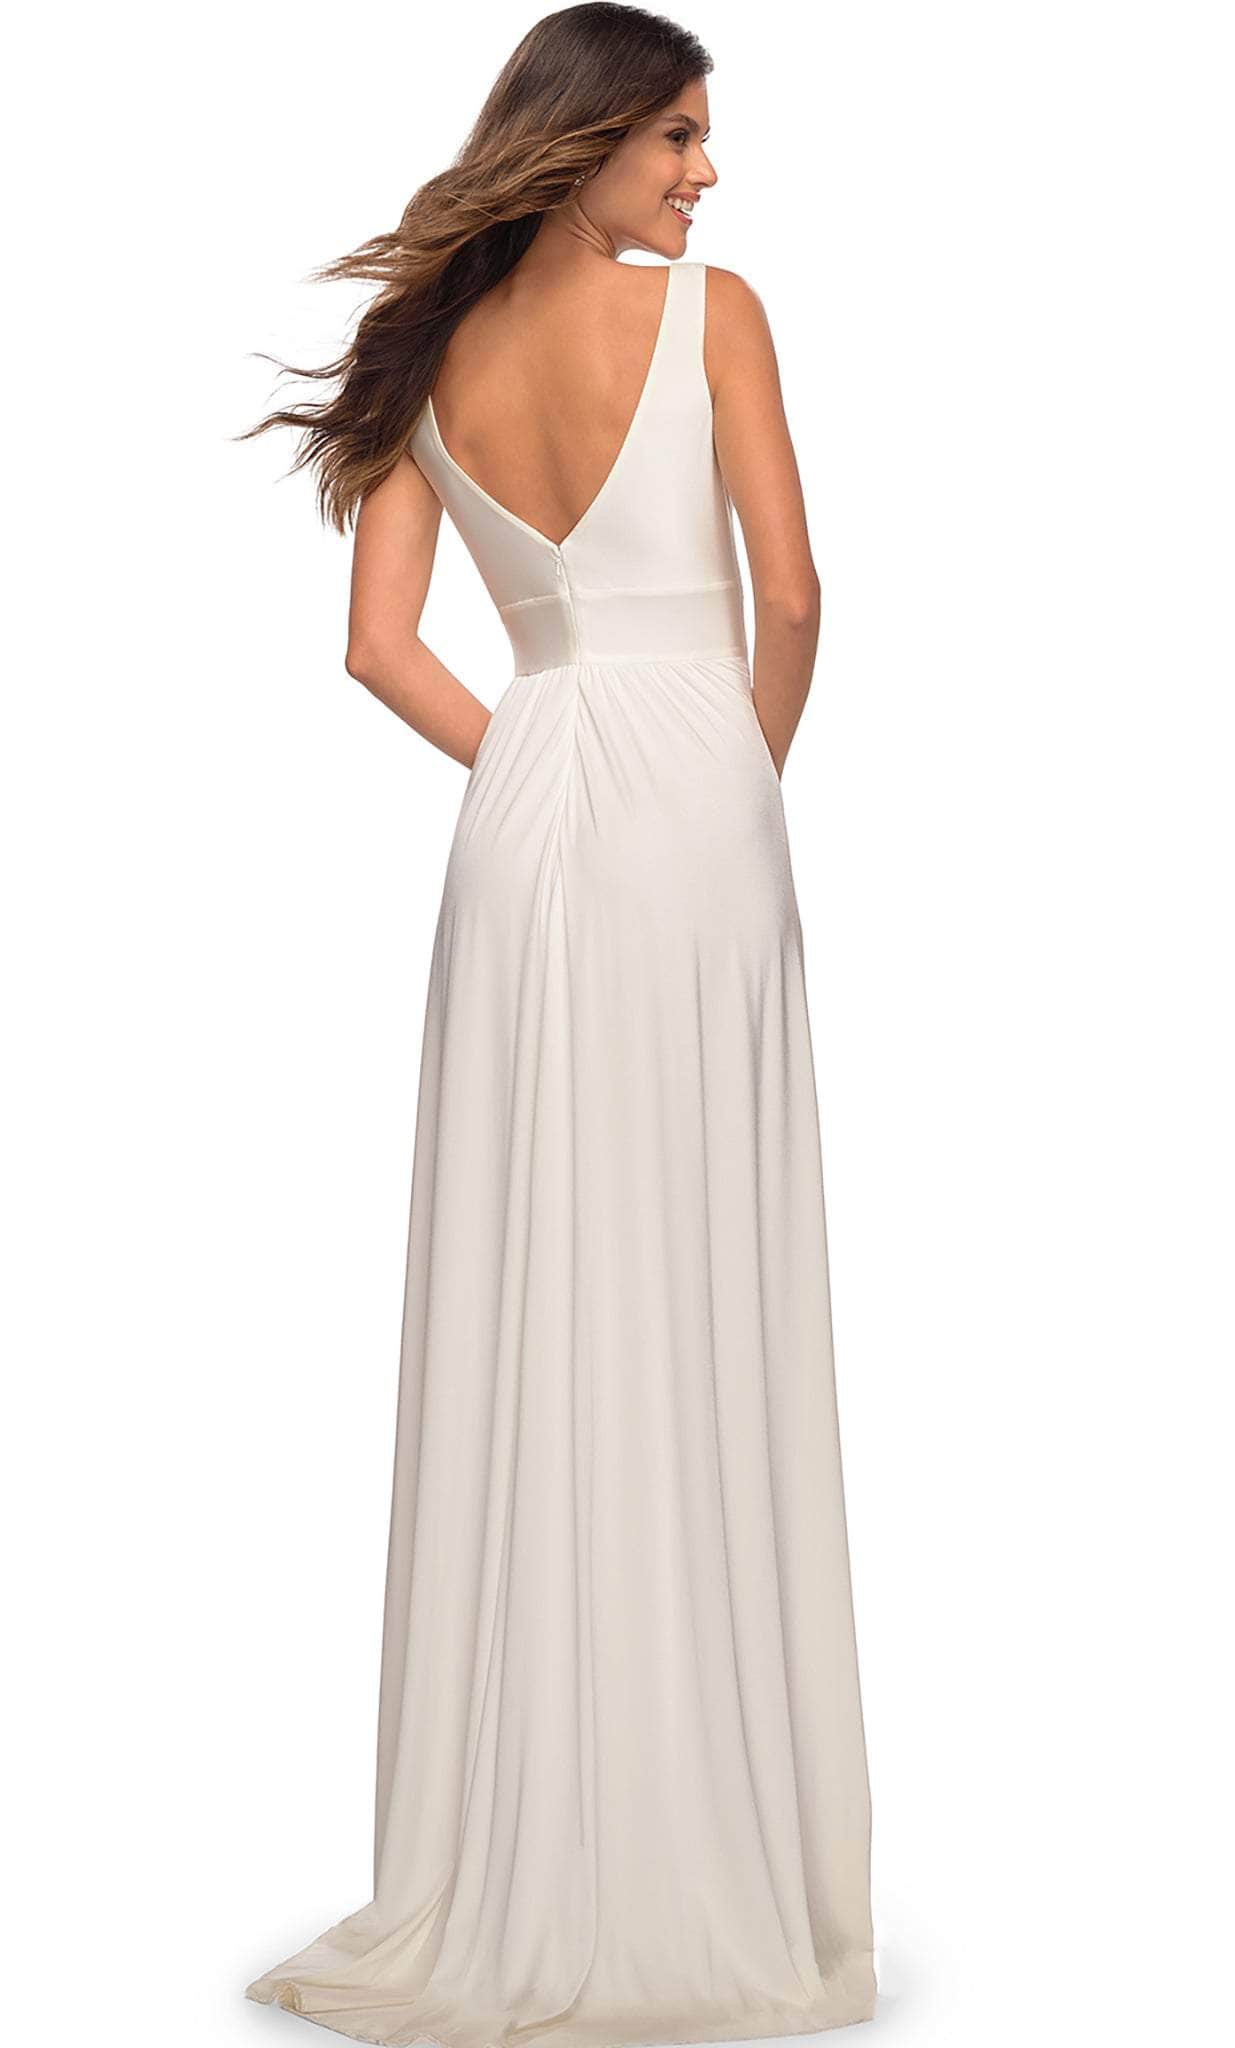 La Femme - 28547 Deep V Neck Empire Waist Sleeveless Prom Gown ...